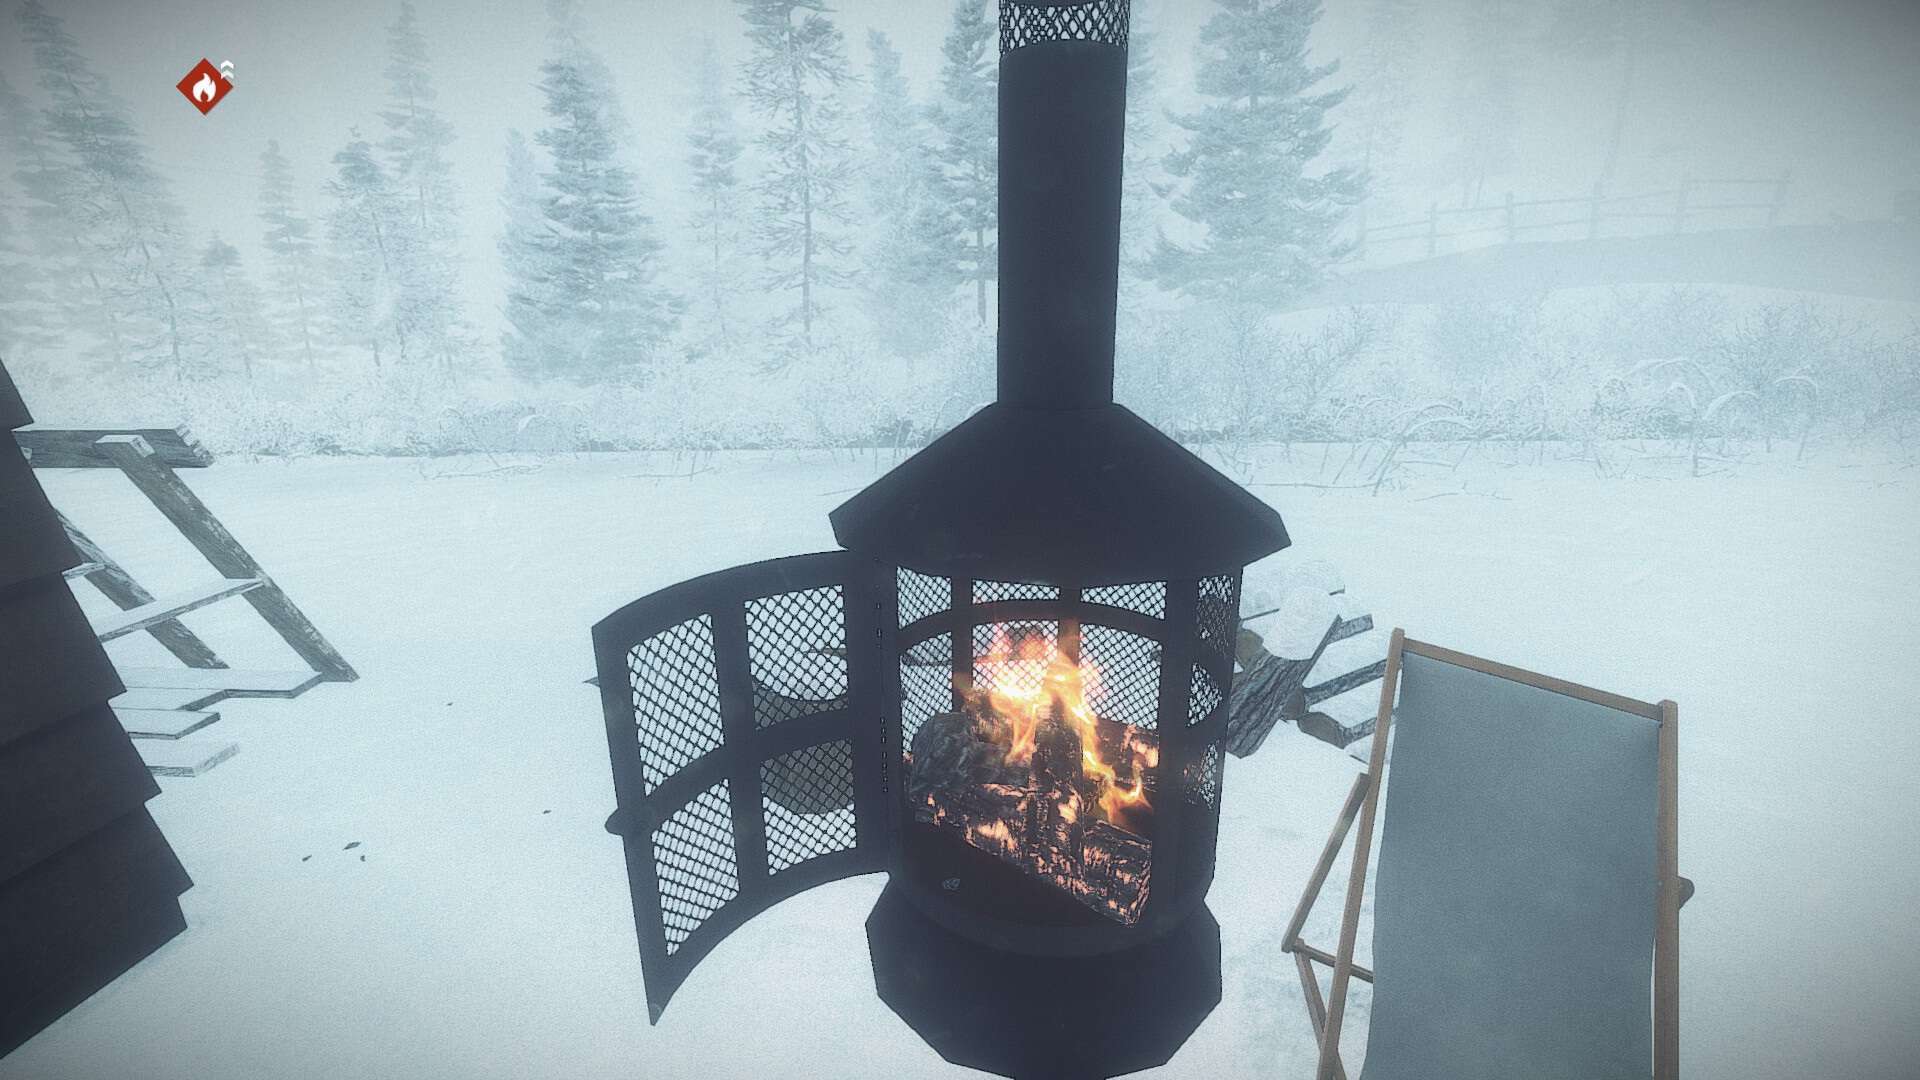 Kona game screenshot, fire